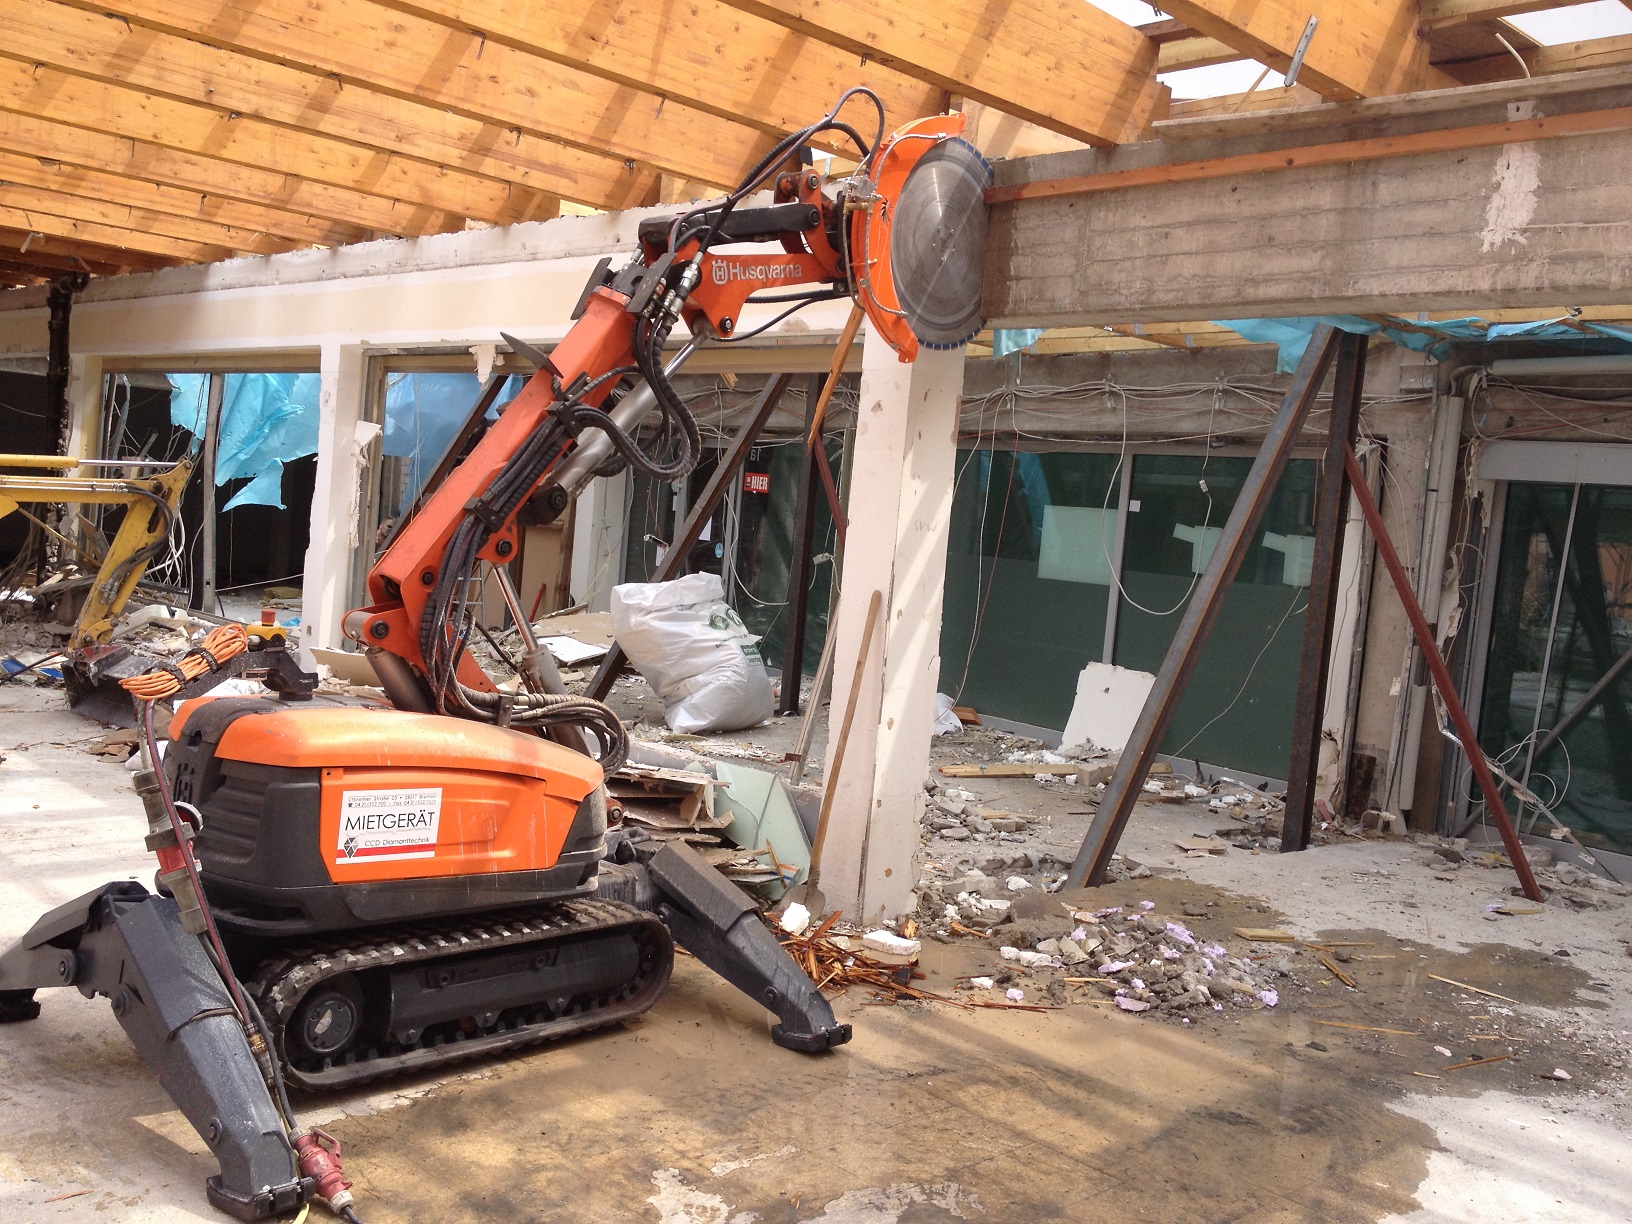 High-performance Demolition Robot Saws <ul>
					<li>Wide range of sizes and power for all demolition robots</li>
					<li>Reduced set-up time as compared with wall saws</li>
					<li>Increased safety compared with human operated saws</li>
					<li>Increased reach versatility compared with walk behind saws</li>
					<li>Access wherever a demolition robot can go</li>
					</ul>